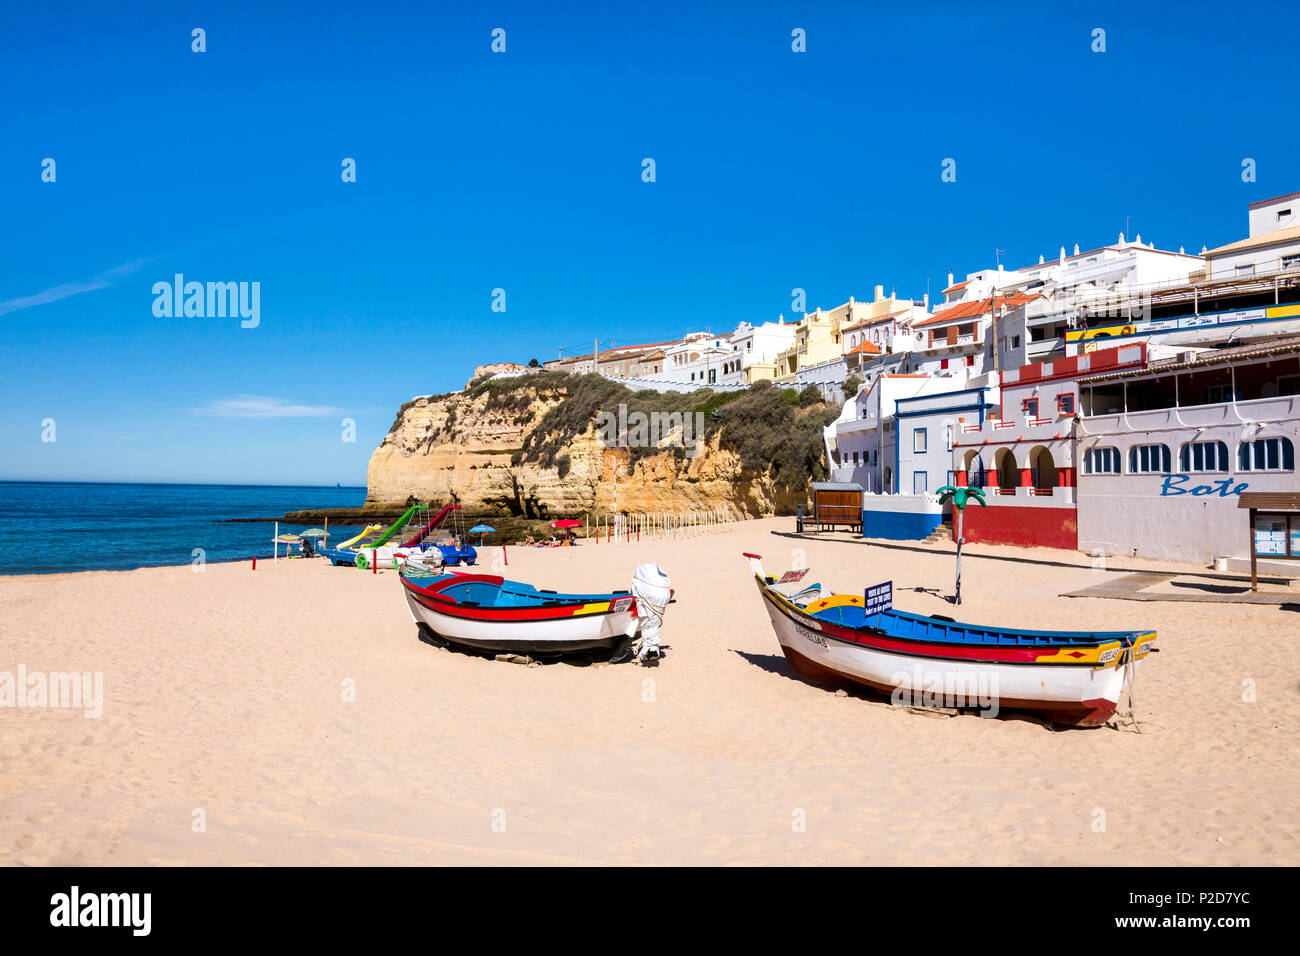 Boats on the beach, Carvoeiro, Algarve, Portugal Stock Photo